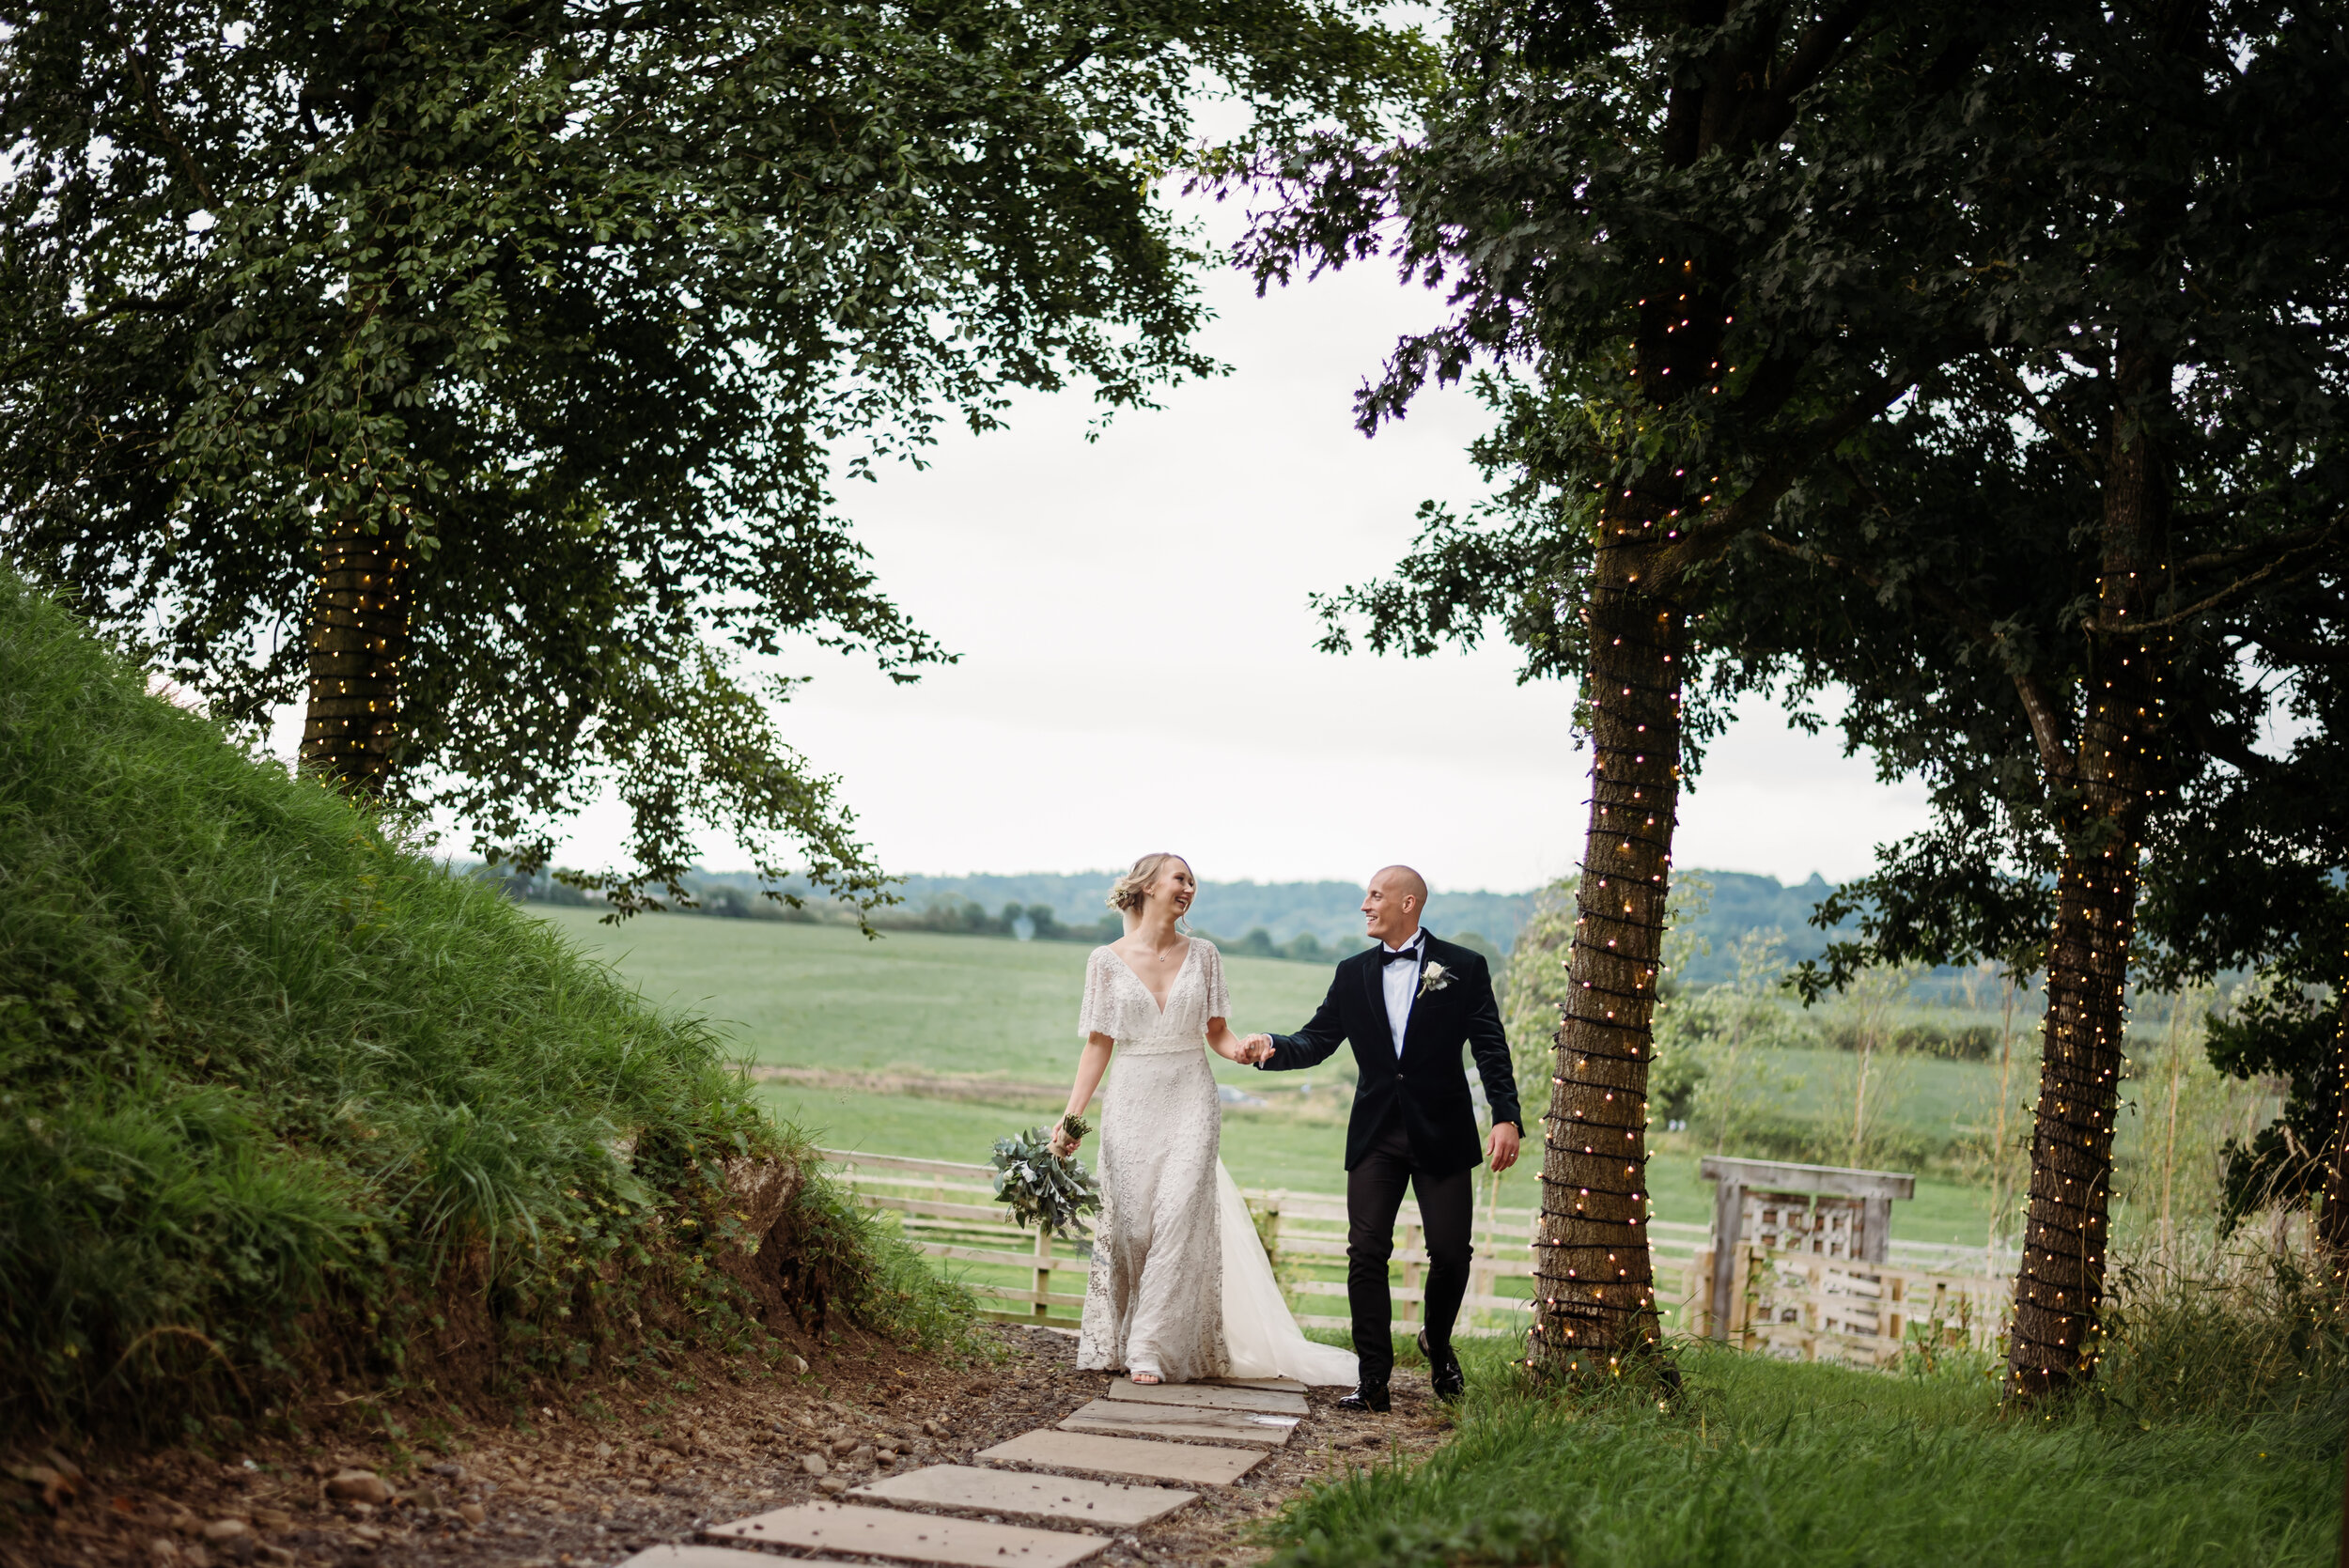 Best Wedding Photographer Lytham St Annes, Janina Brocklesby - WPJA 2274182